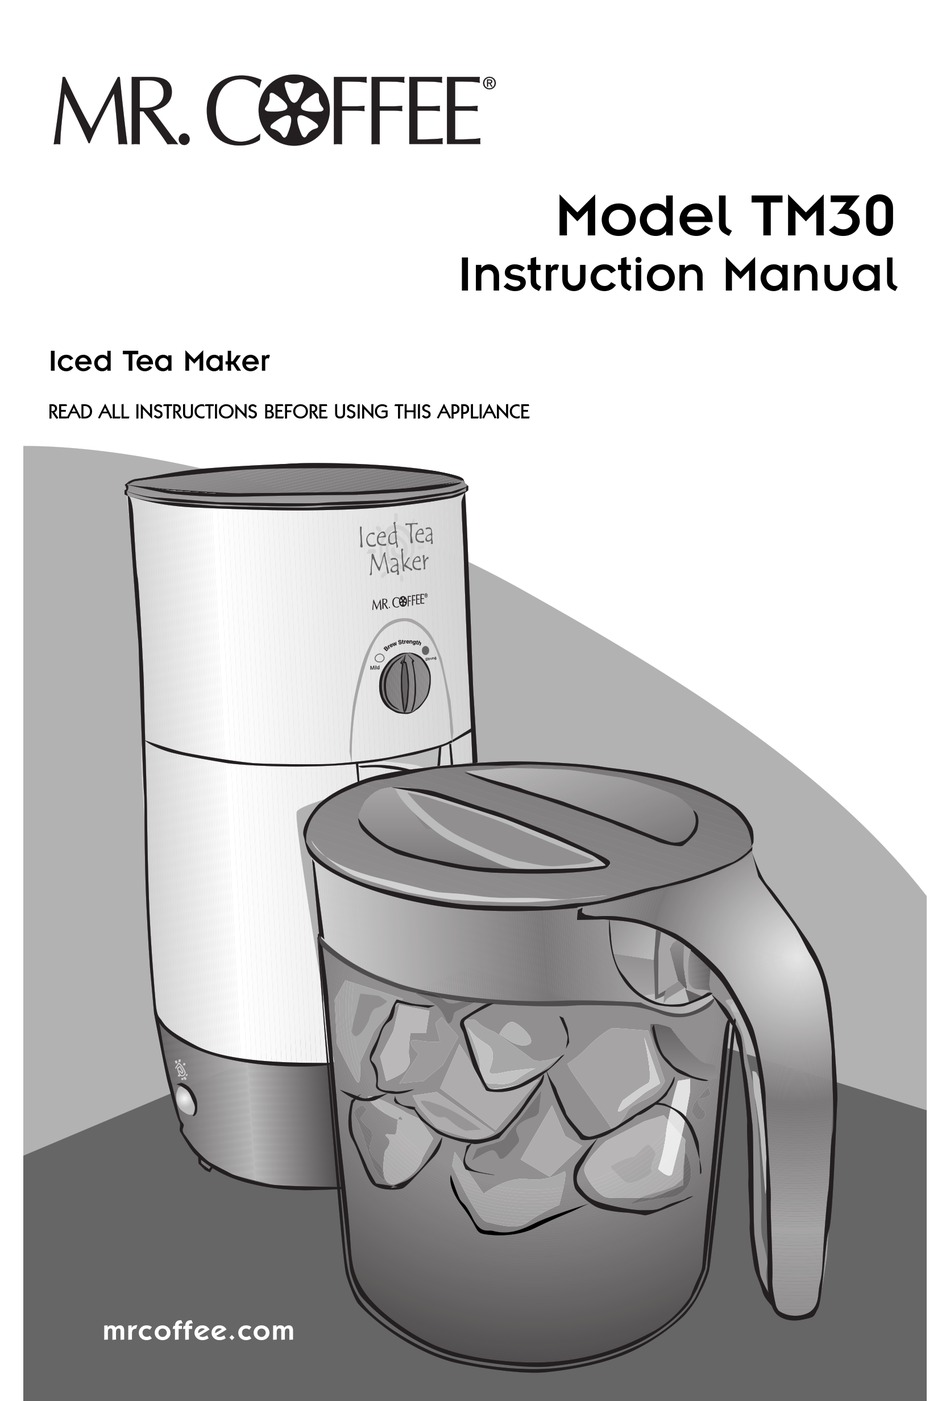 Mr. Coffee TM30 Instruction Manual - Iced Tea Maker